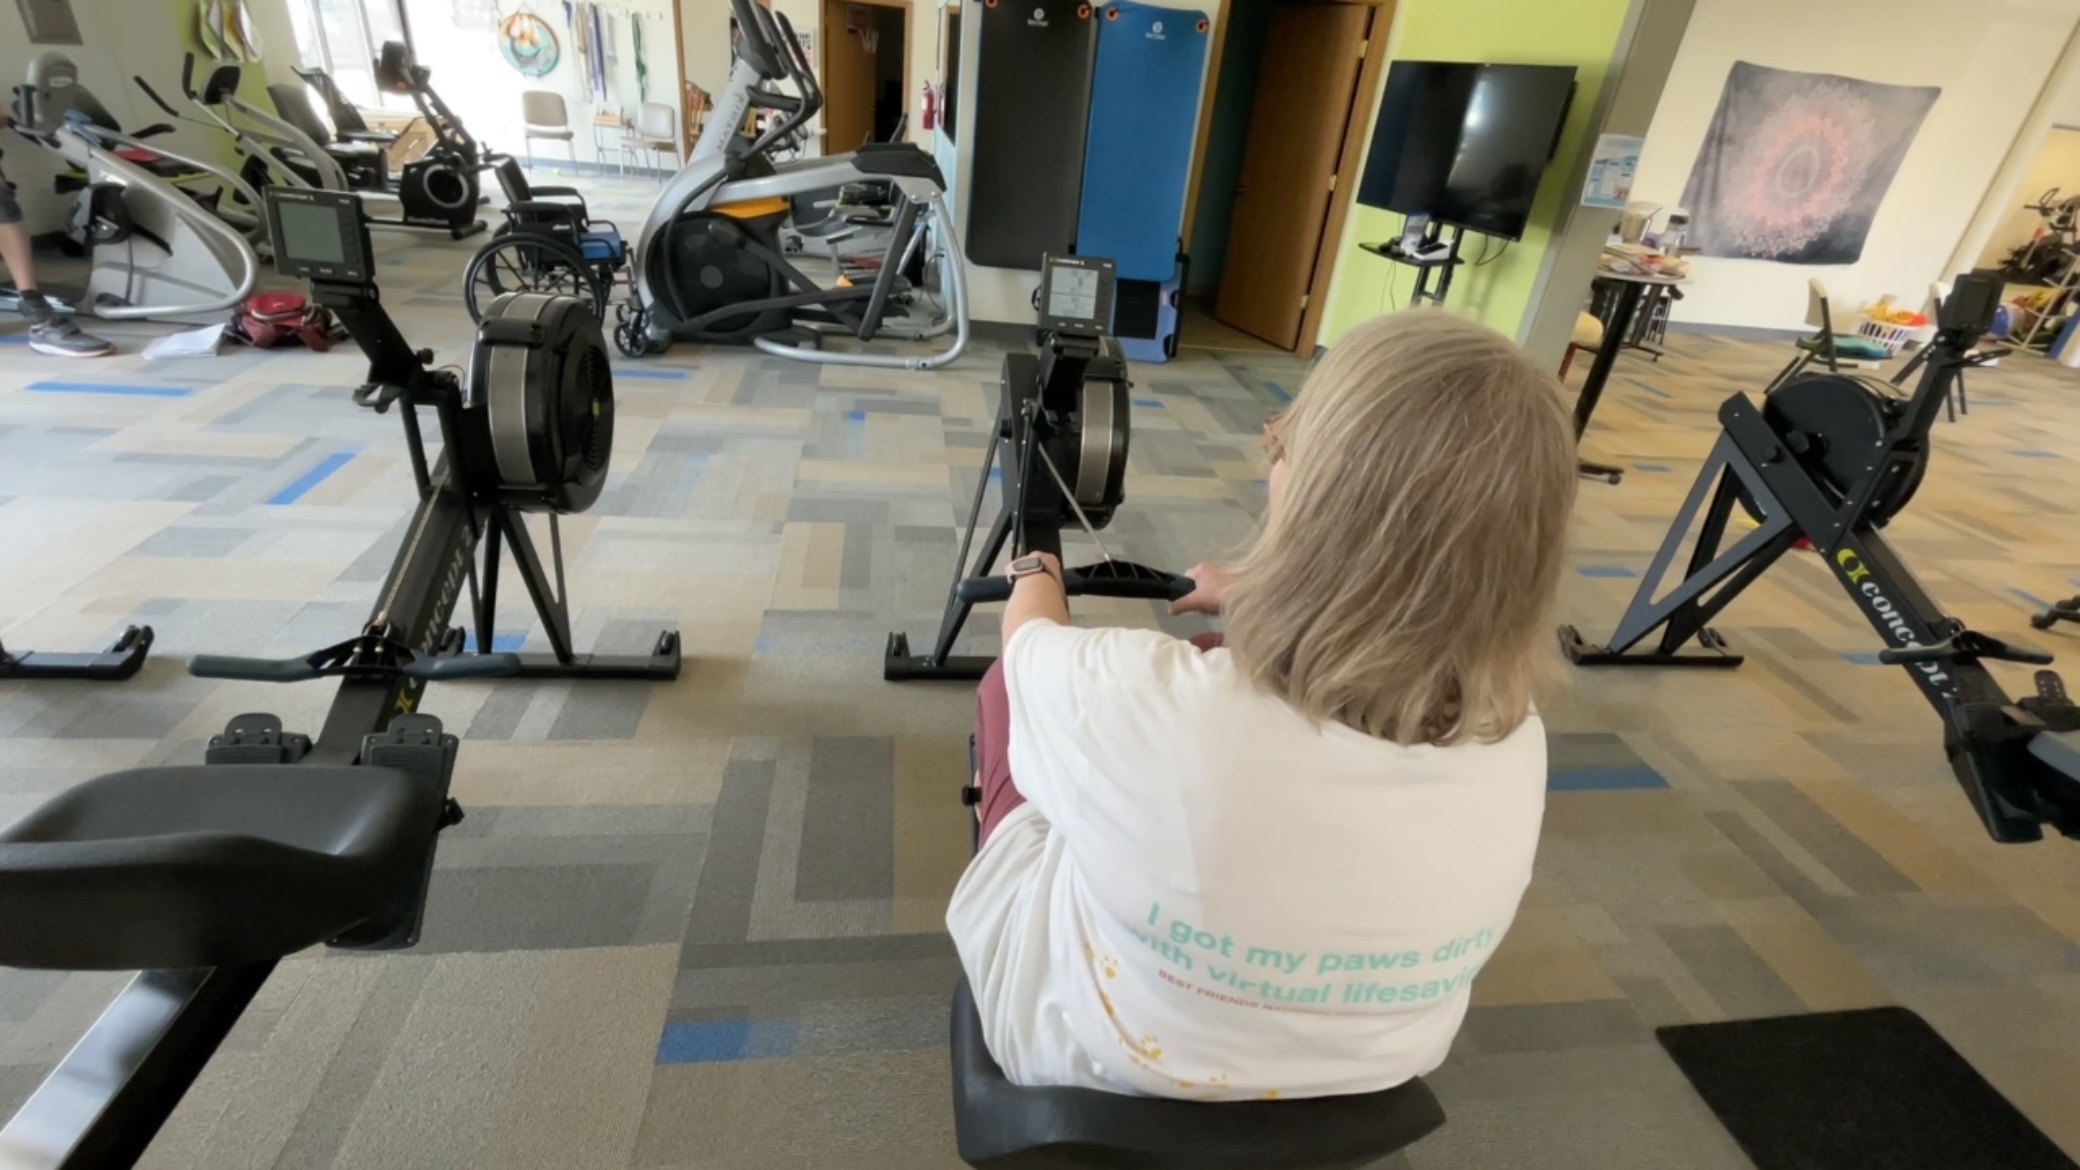 NeuroFit Gym wins $25K for rowing program for those neurological